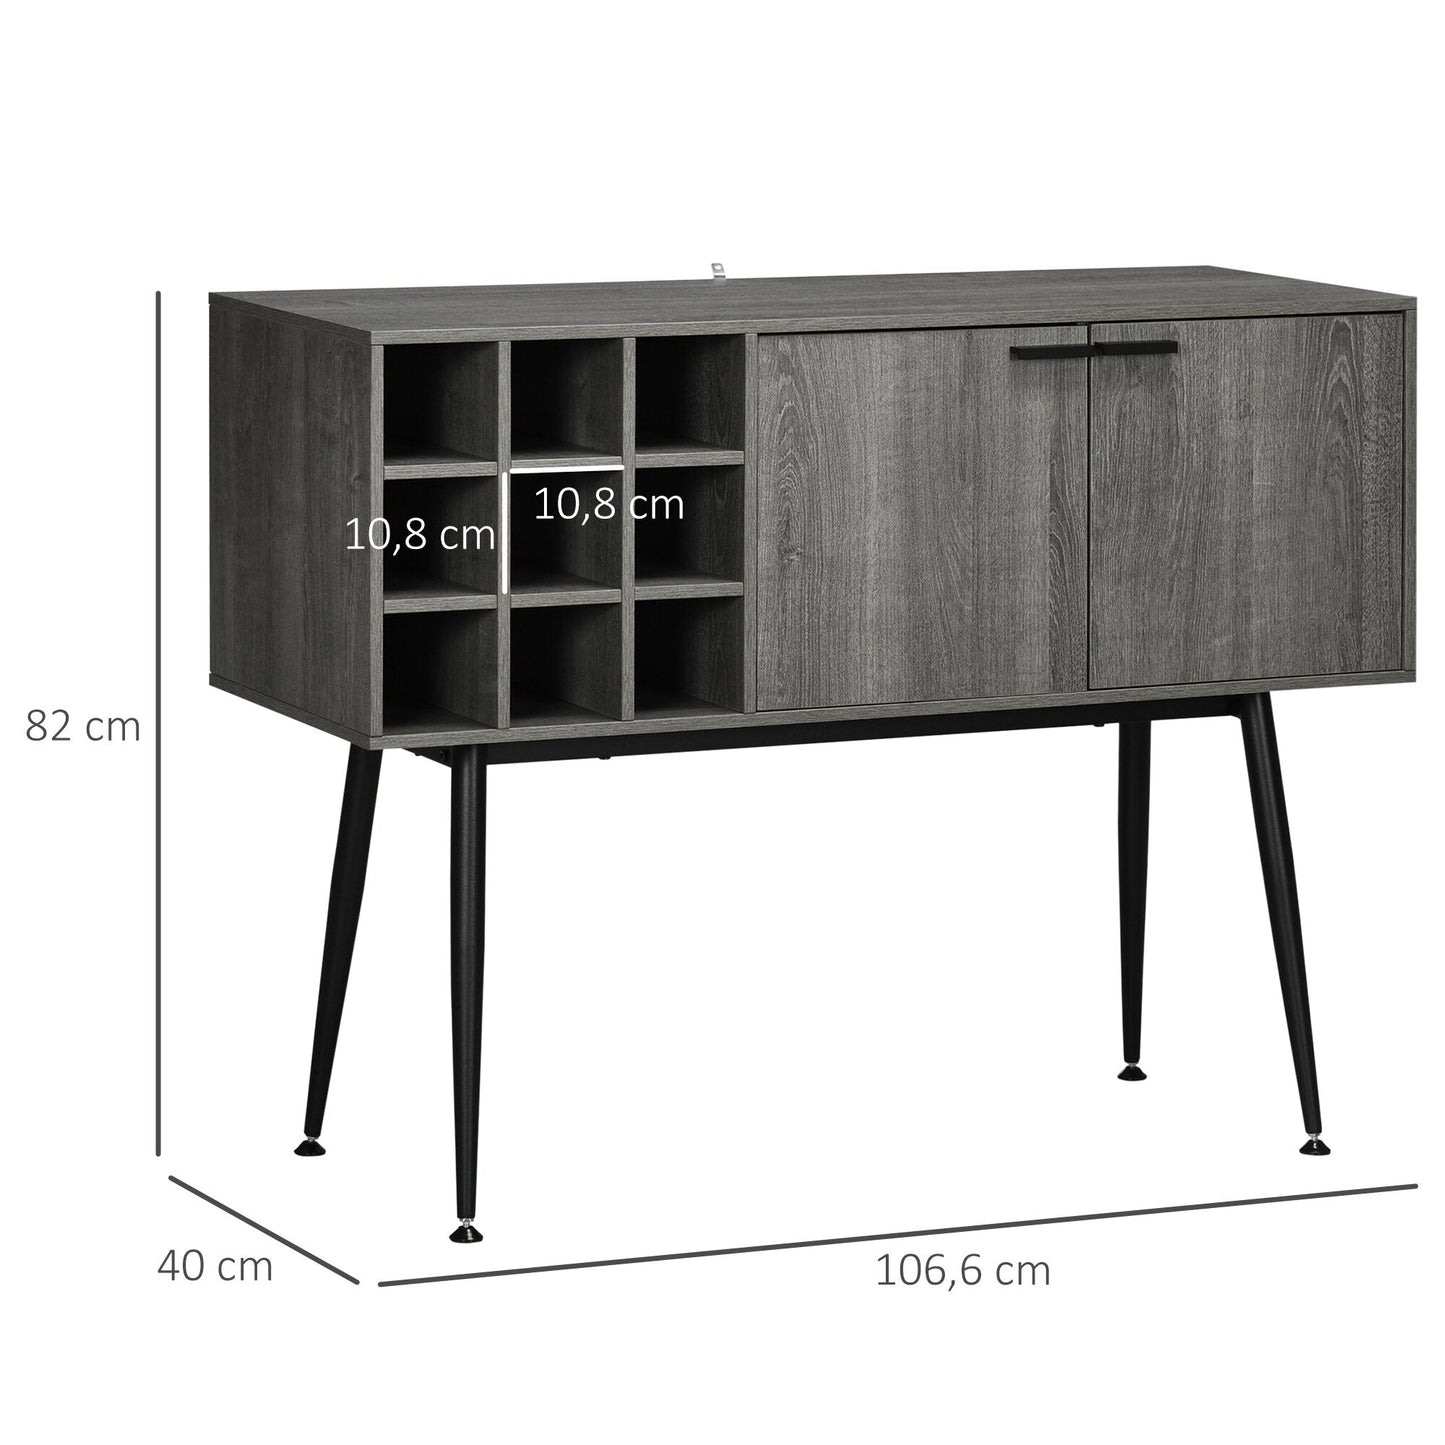 HOMCOM kitchen sideboard 2-door Buffet furniture 9-bottle wine rack with Metal legs for living room dining room 106,6x40x82 cm Gray